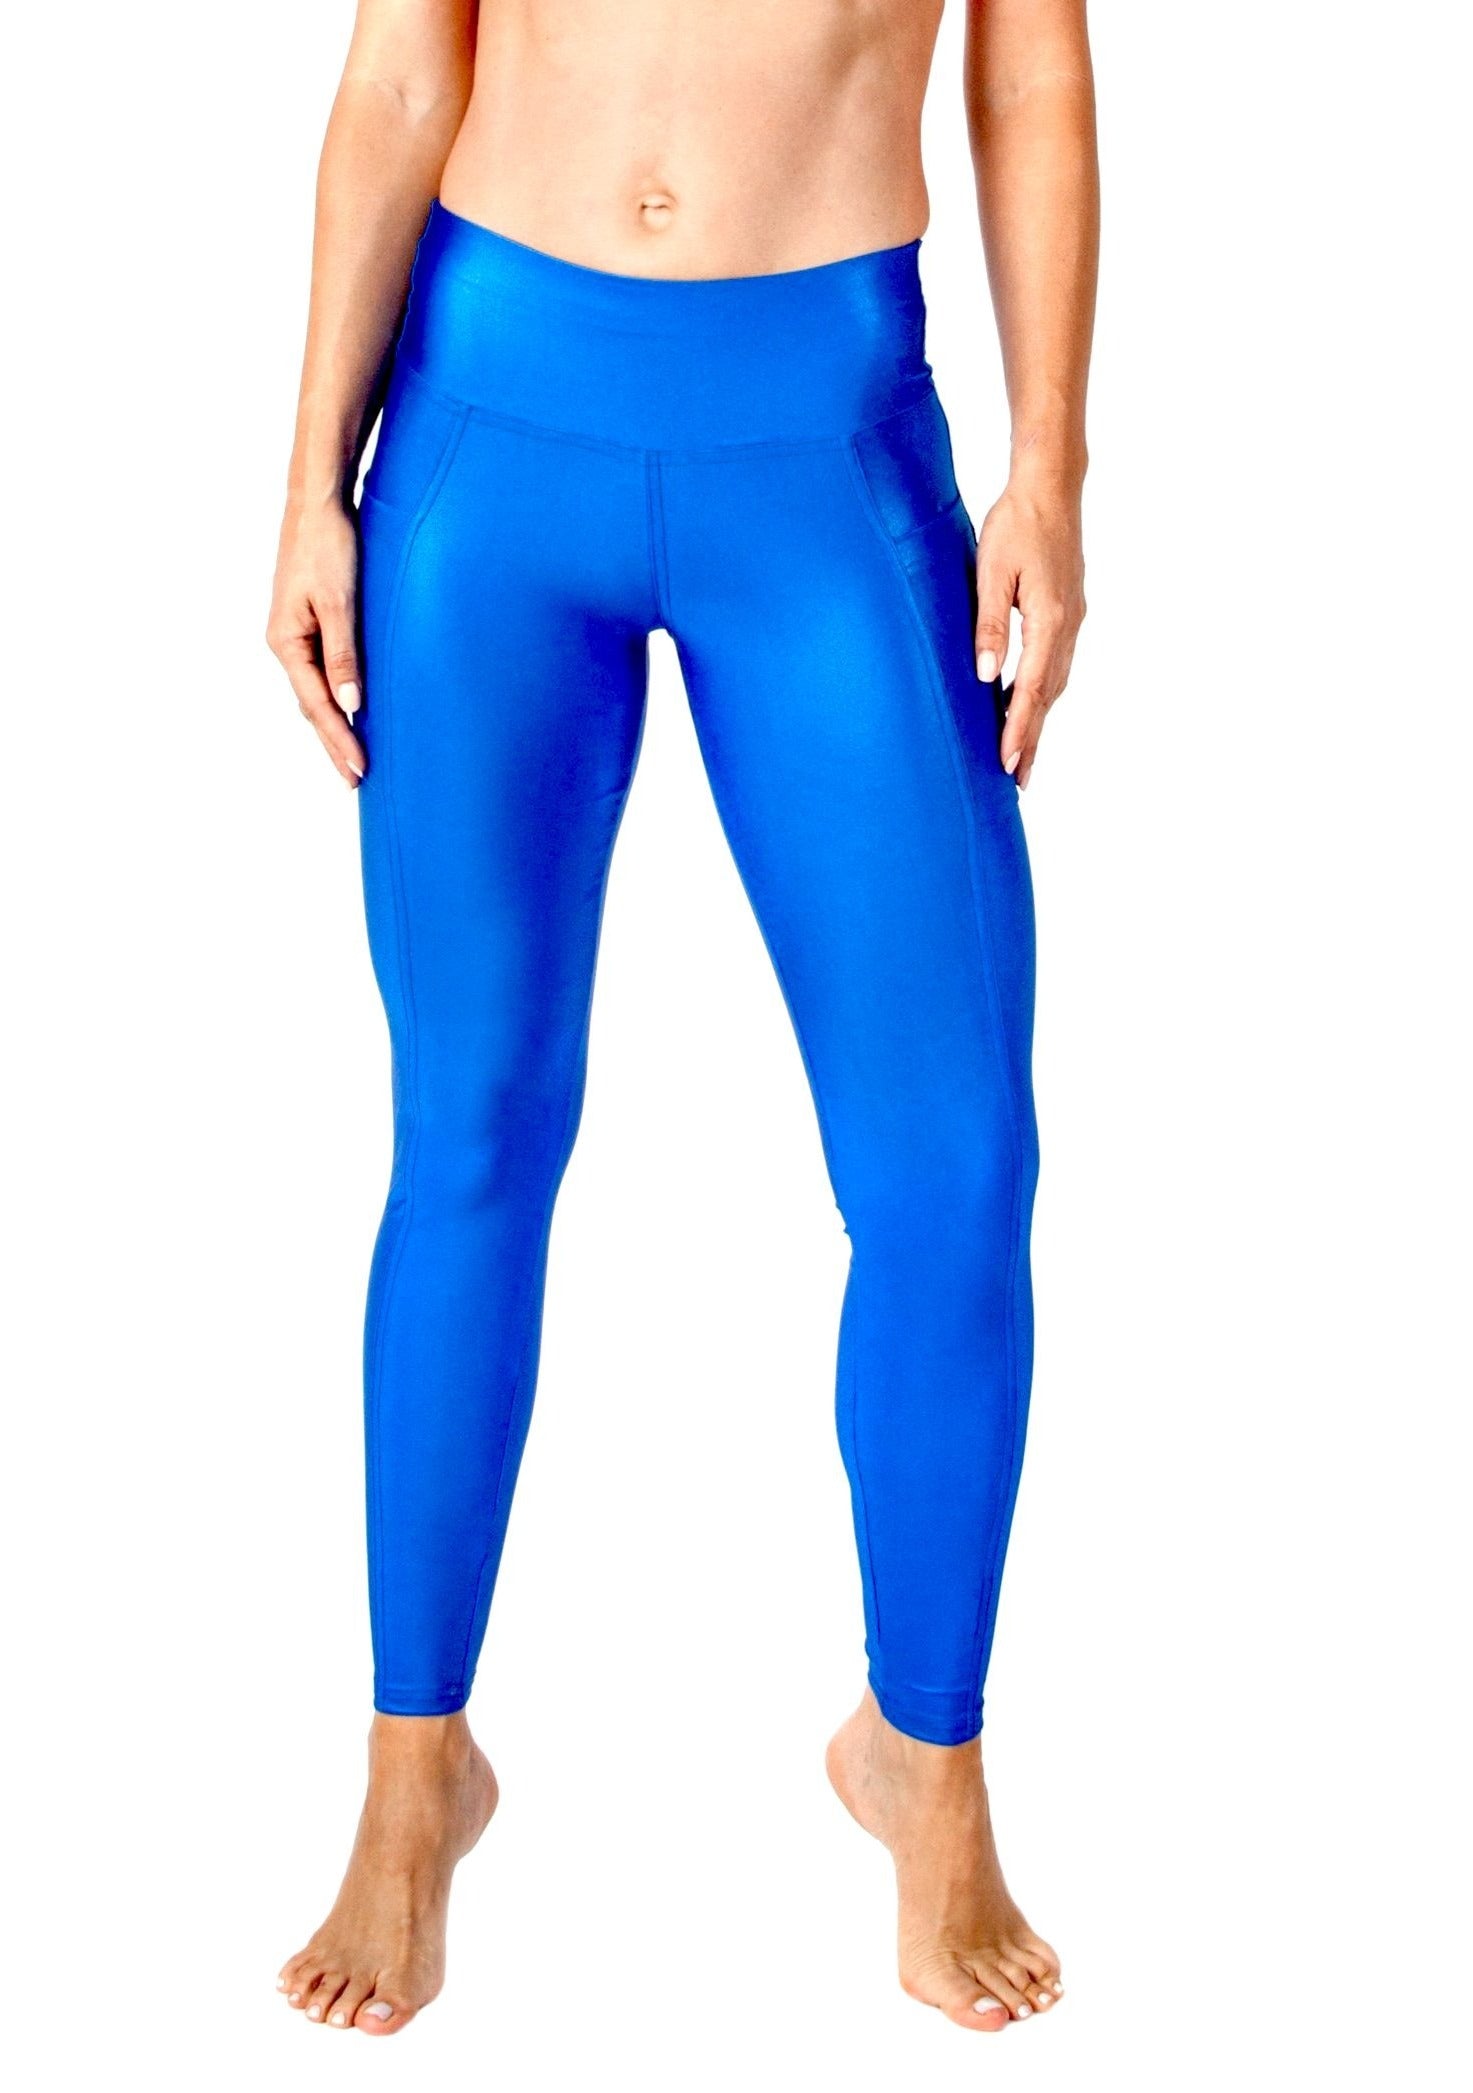 Zelos Westly blue leggings  Blue leggings, Gym shorts womens, Leggings